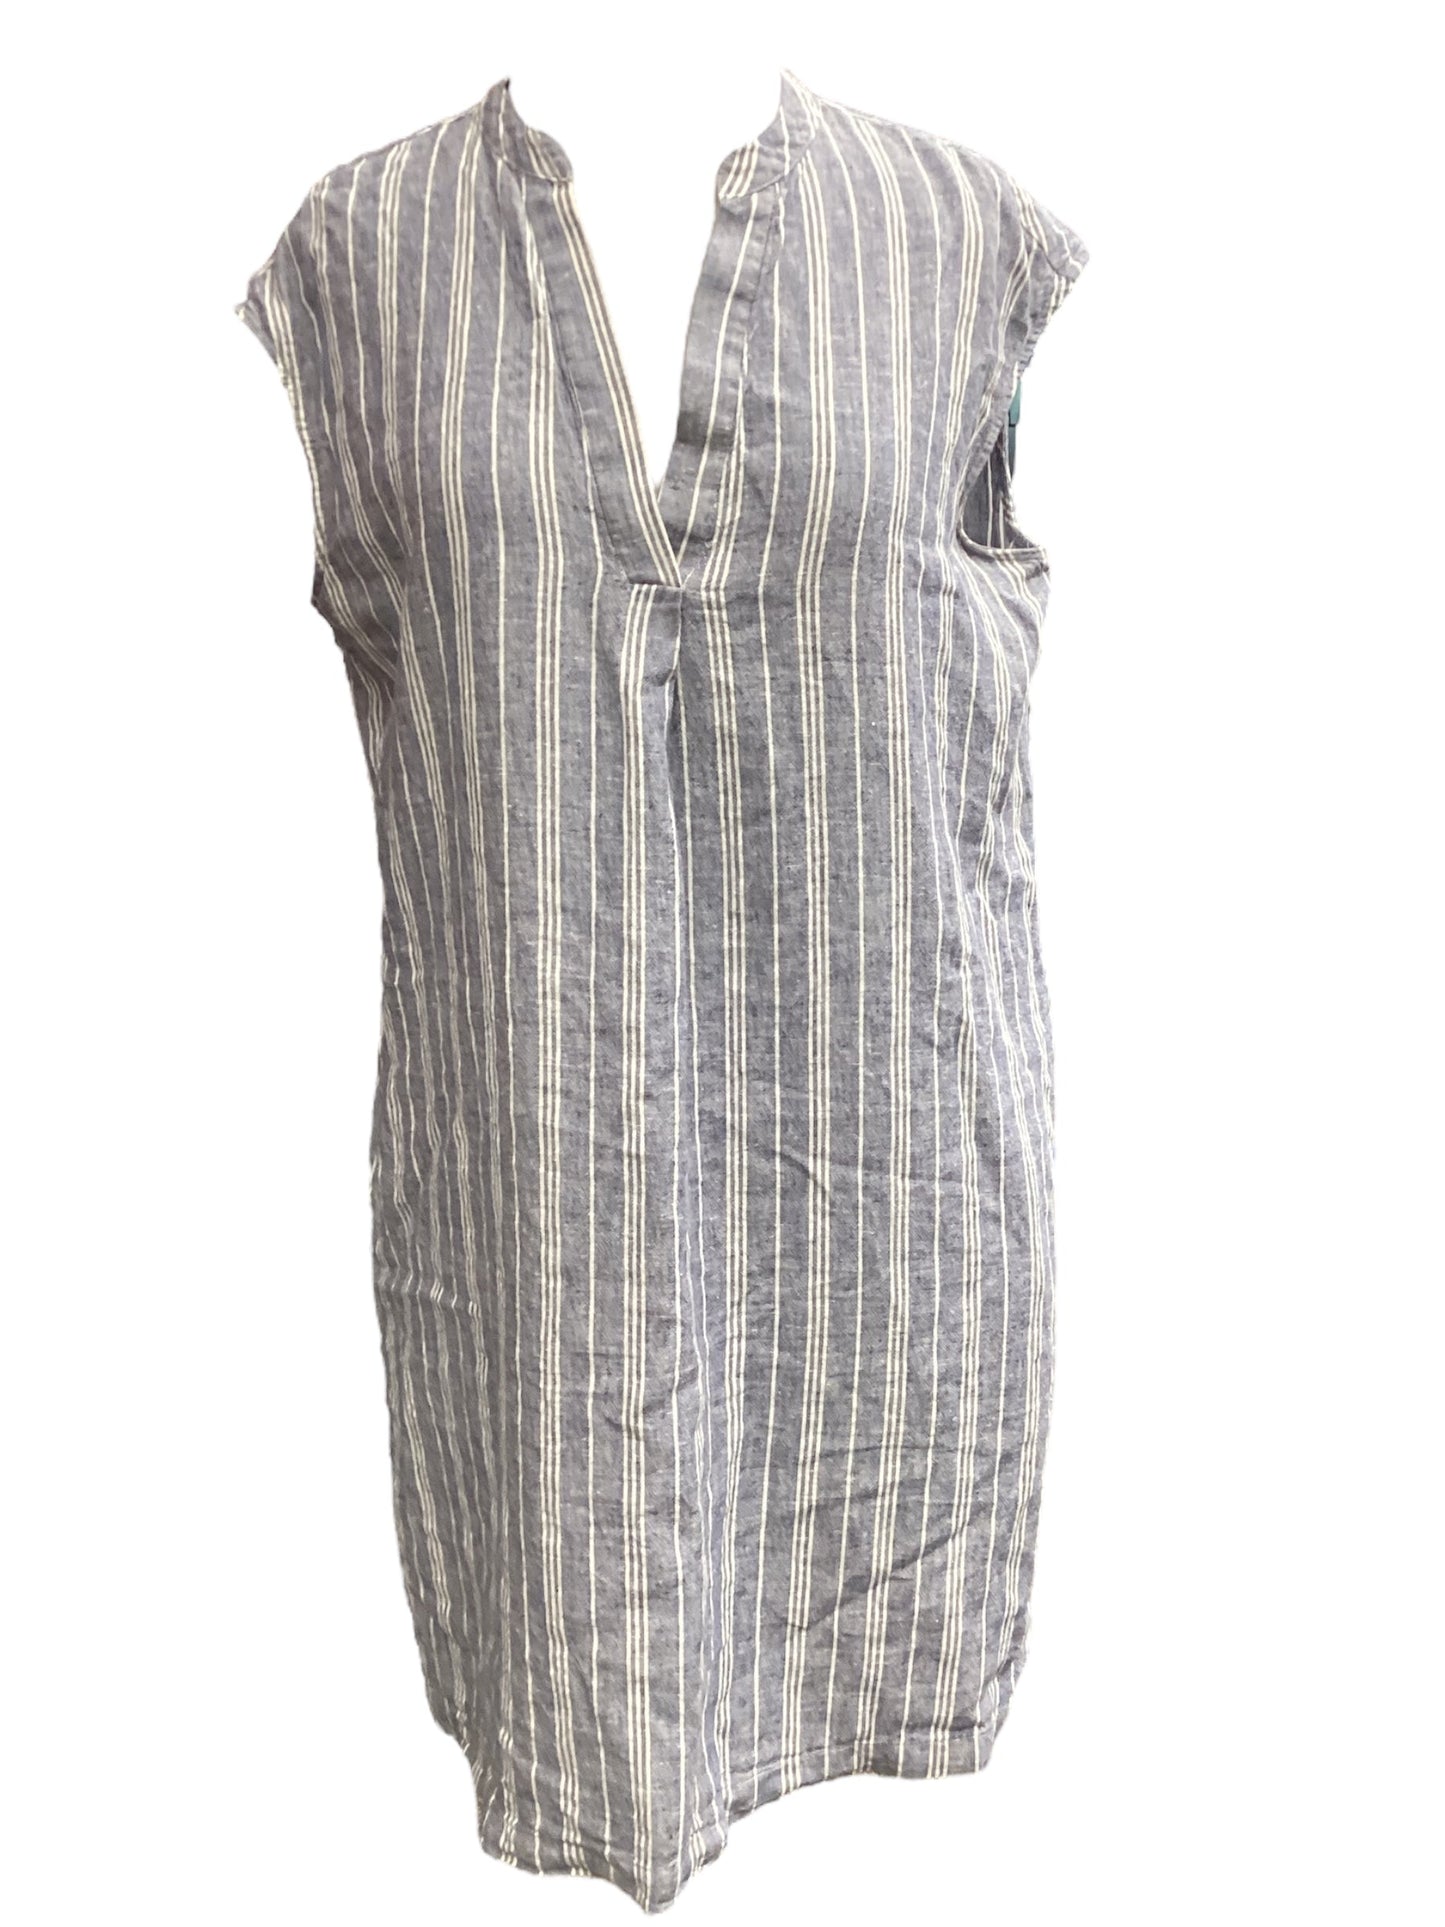 Striped Pattern Dress Casual Midi Jones New York, Size 12